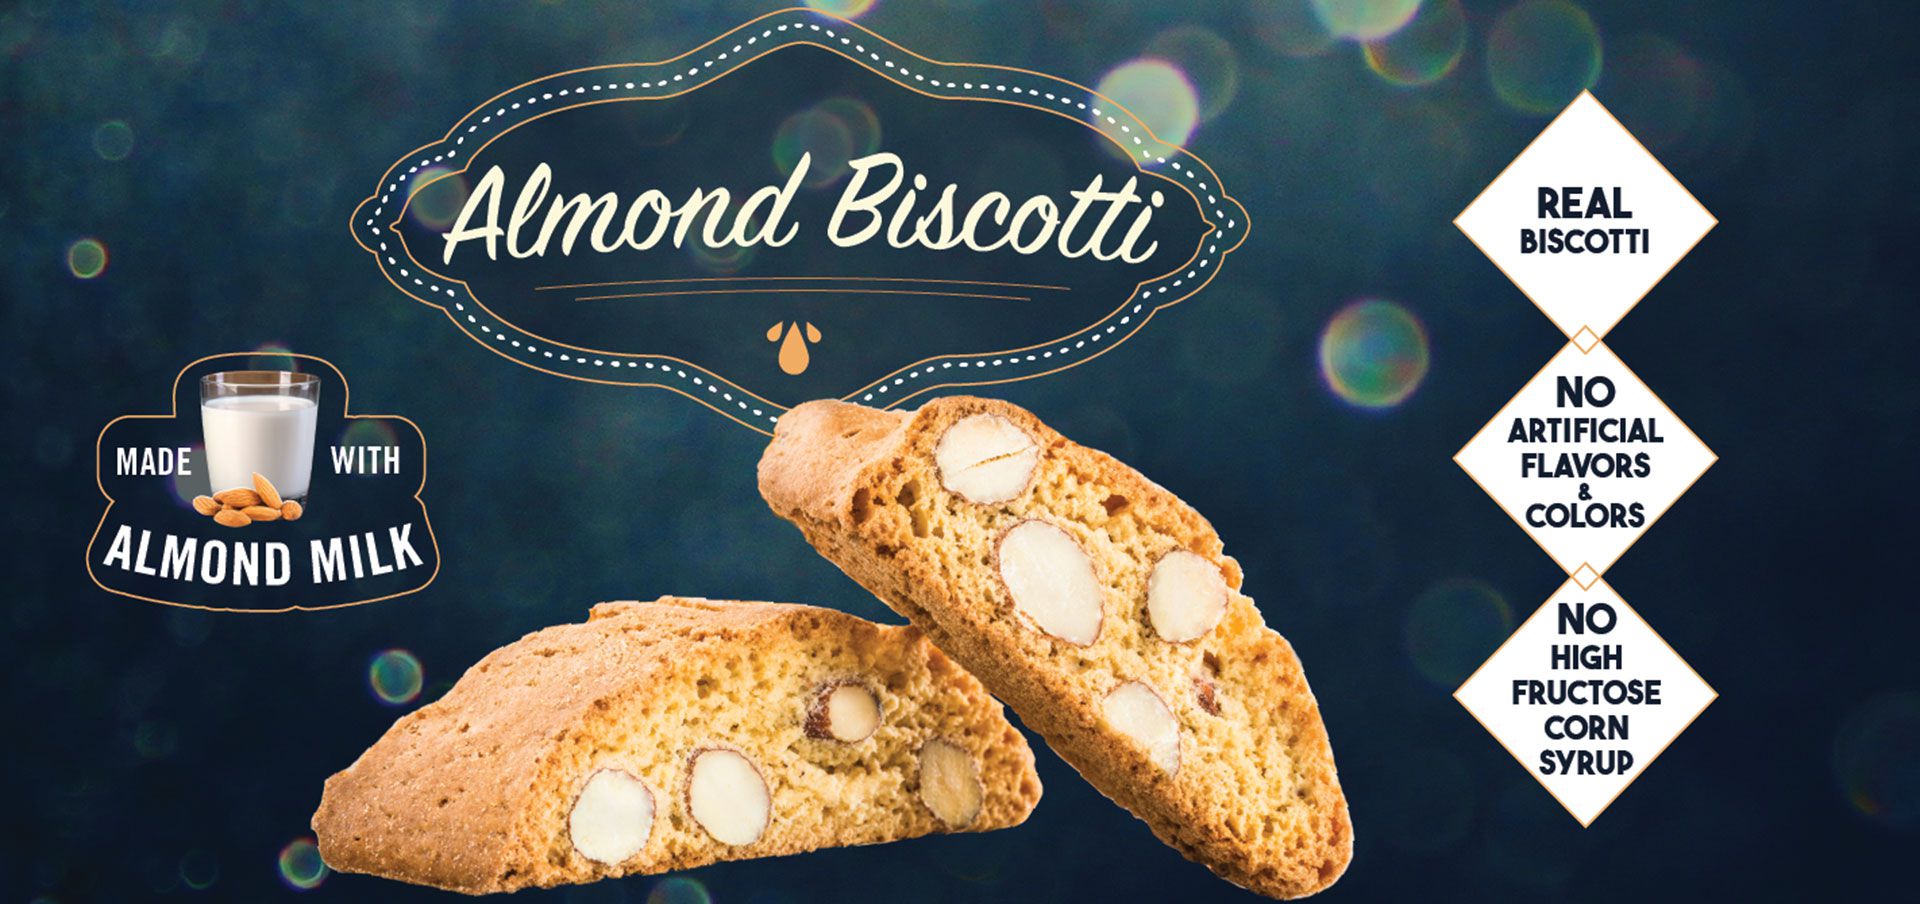 almond biscotti label image